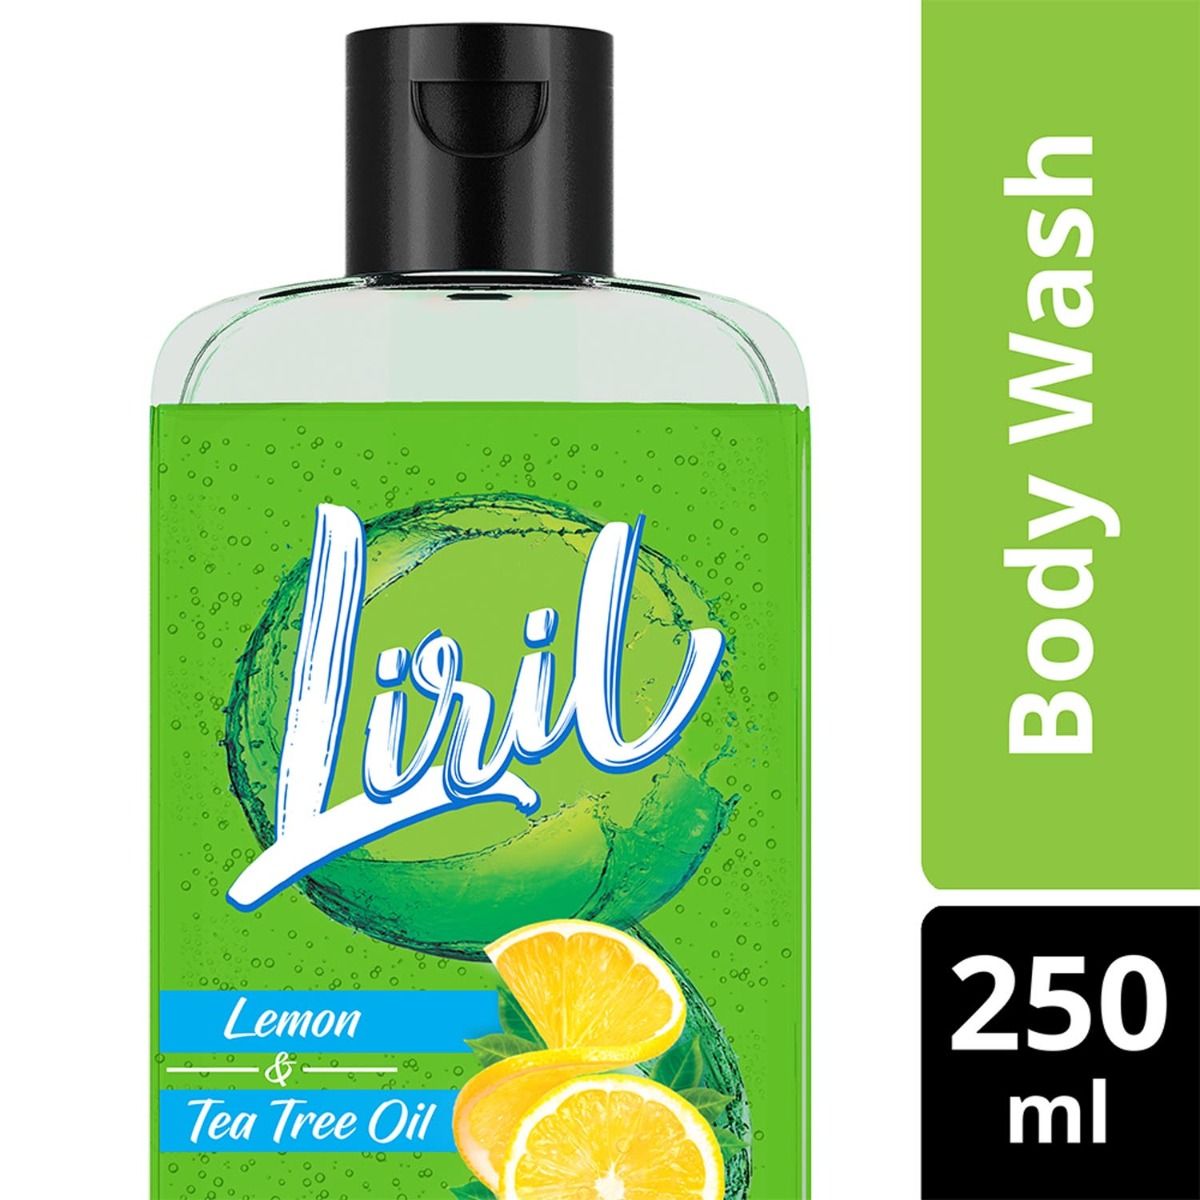 Buy Liril Lemon and Tea Tree Oil Body Wash, 250 ml Online